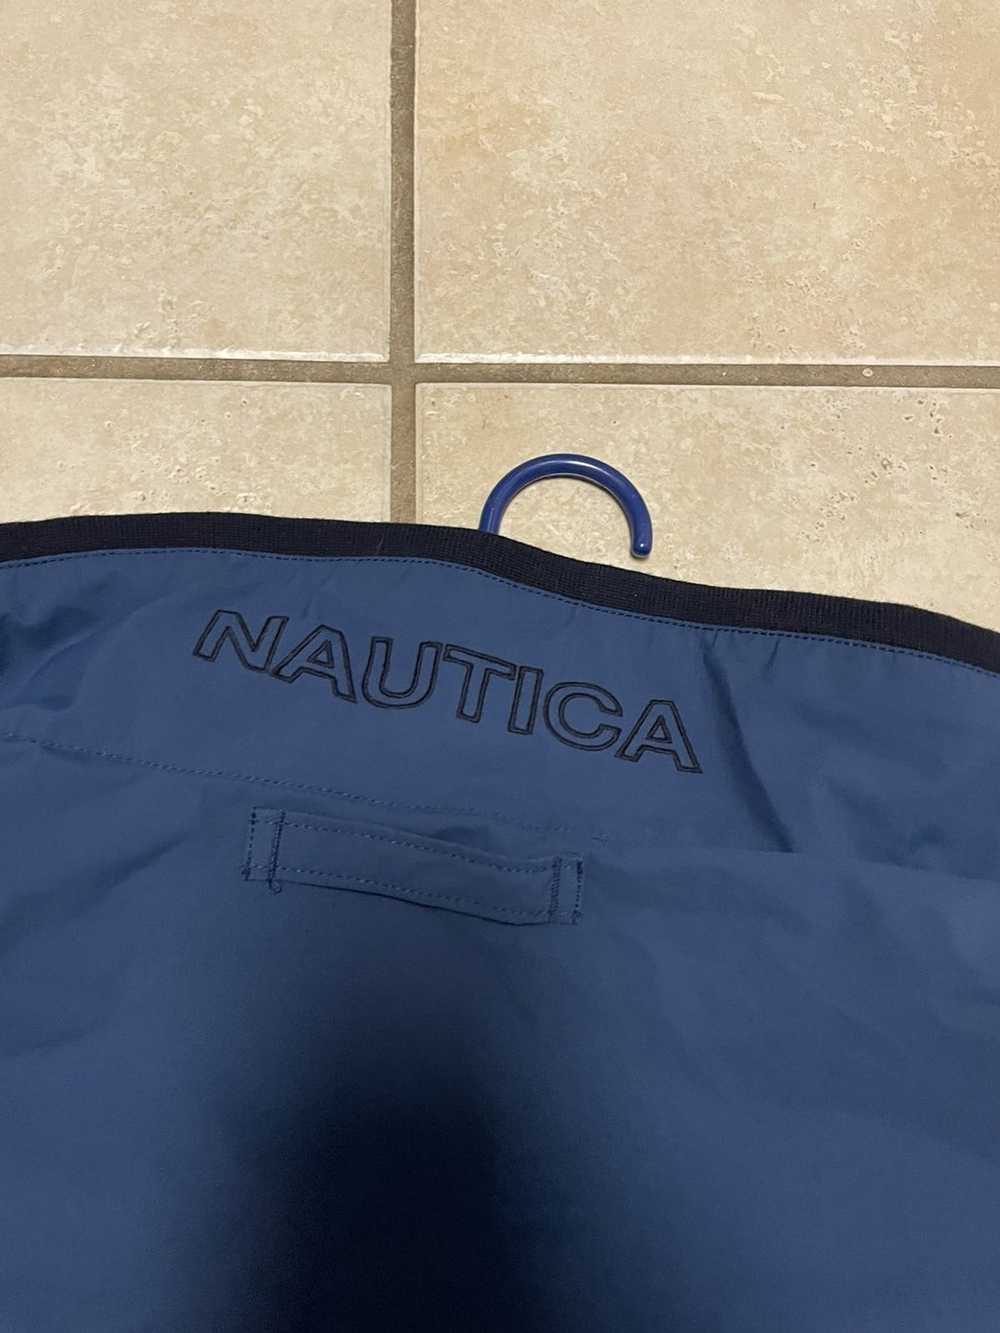 Nautica Vintage Blue Náutica Jacket - image 4